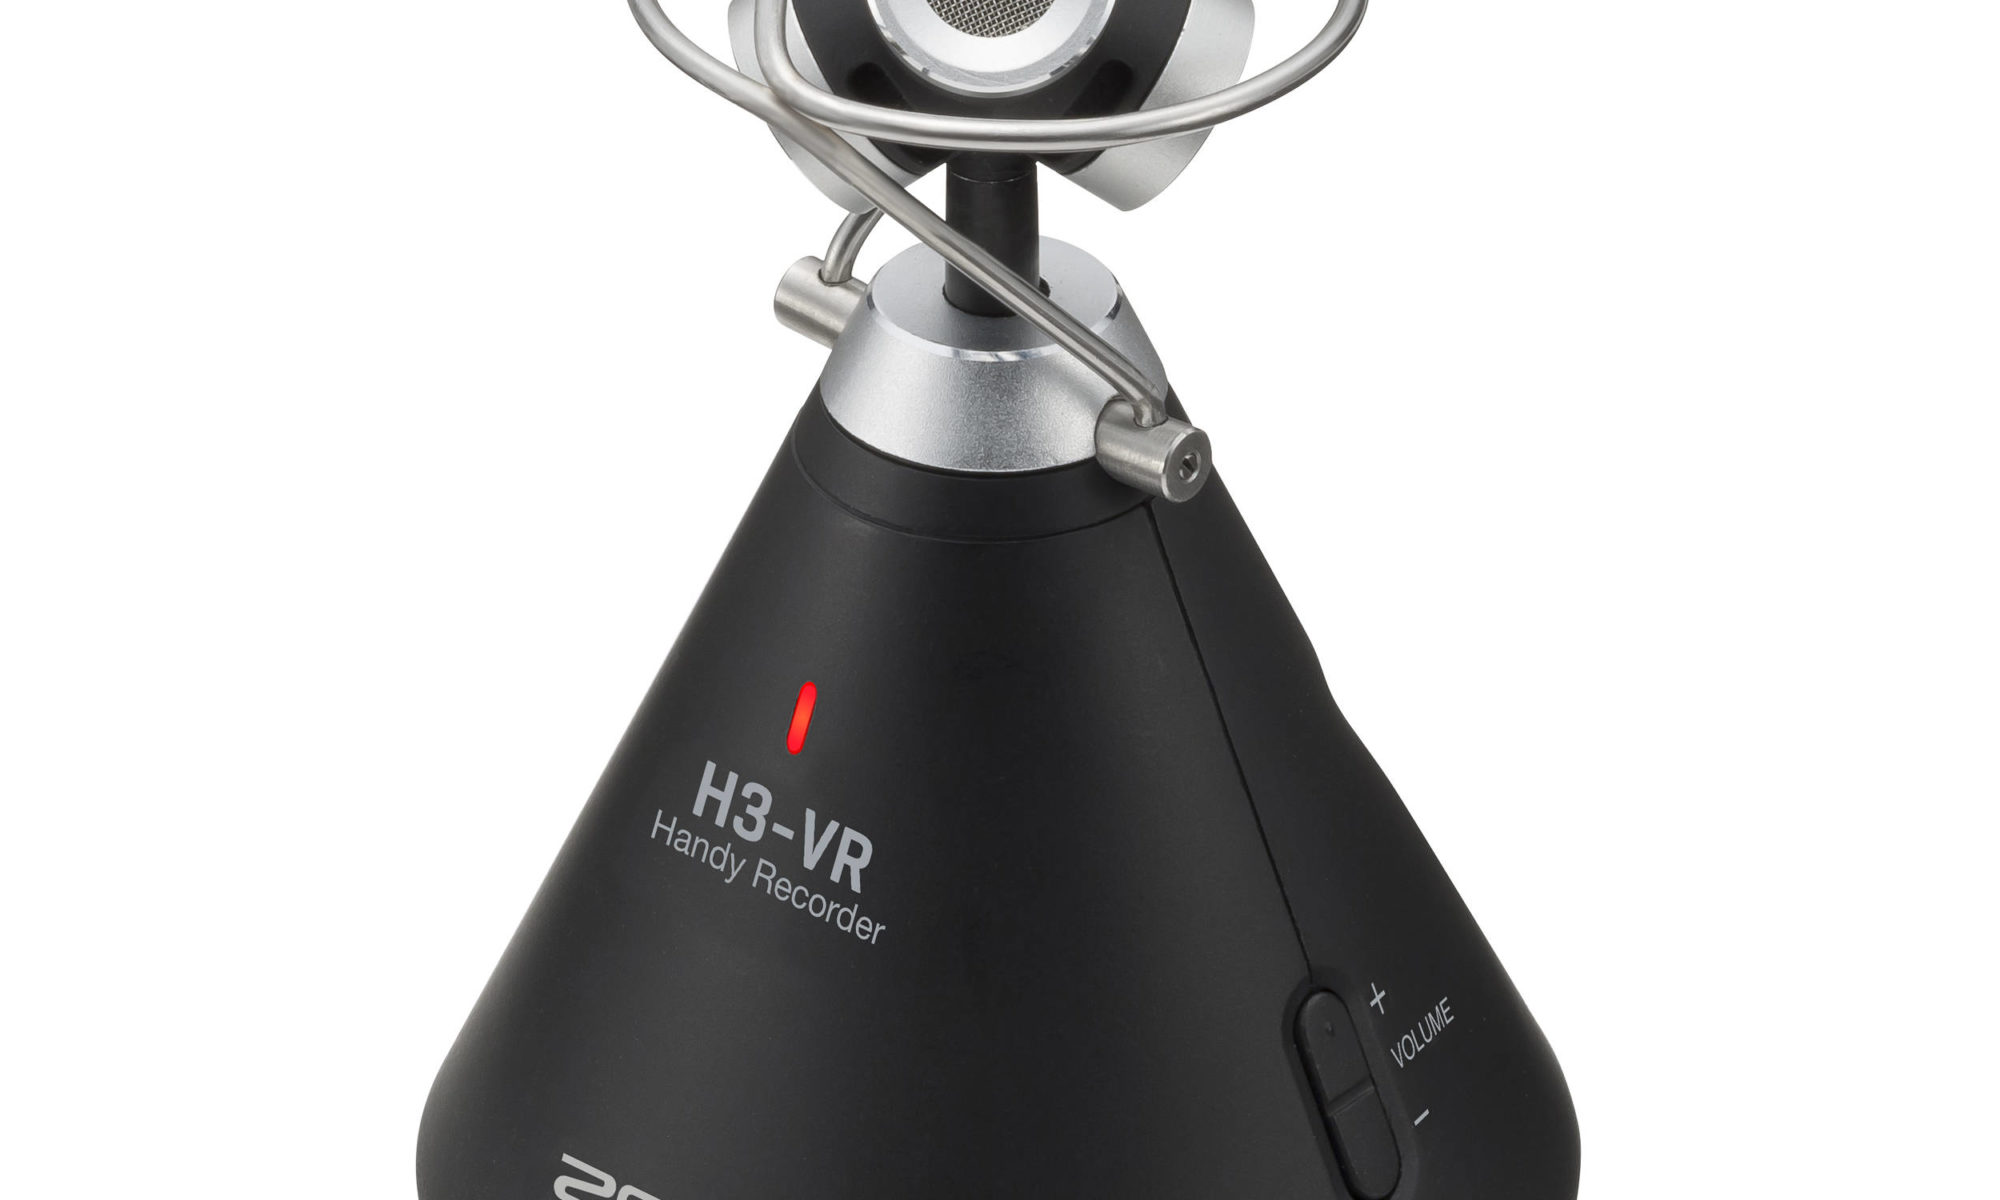 Zoom H3-VR audio recorder.